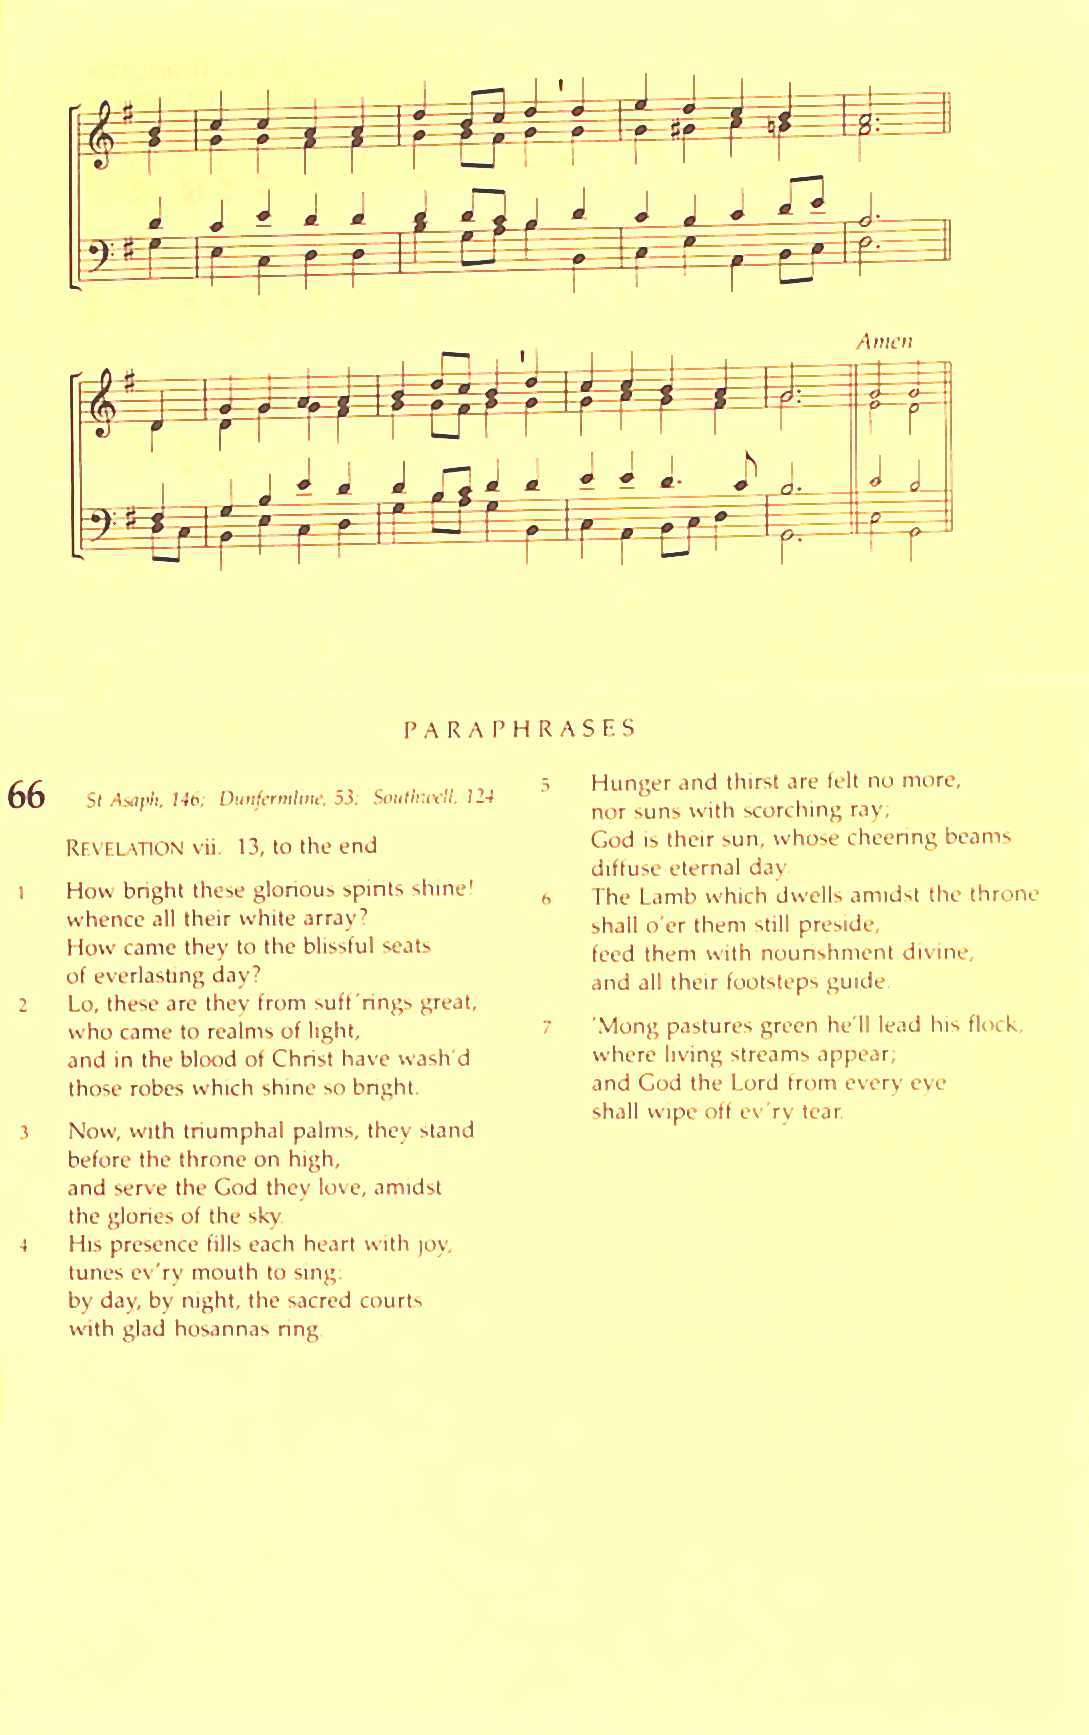 The Irish Presbyterian Hymbook page 756